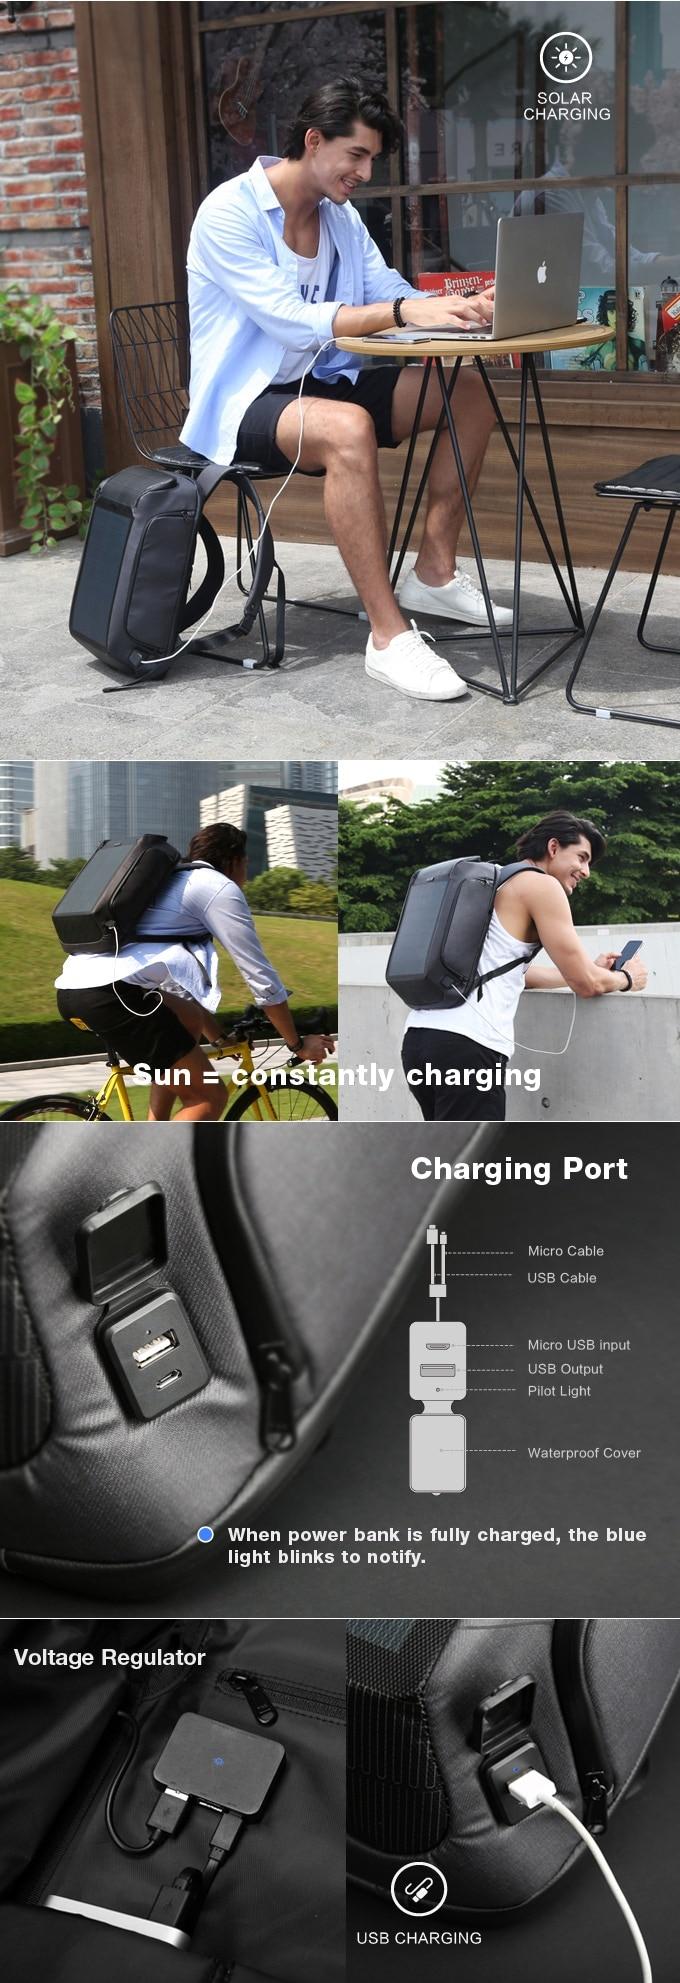 REJS LANGT Beam Backpack Men Solar Panel Charging Usb Backpack Fit 15.6 Inch Laptop Anti-Theft Travel Bag High Quailty Kingsons